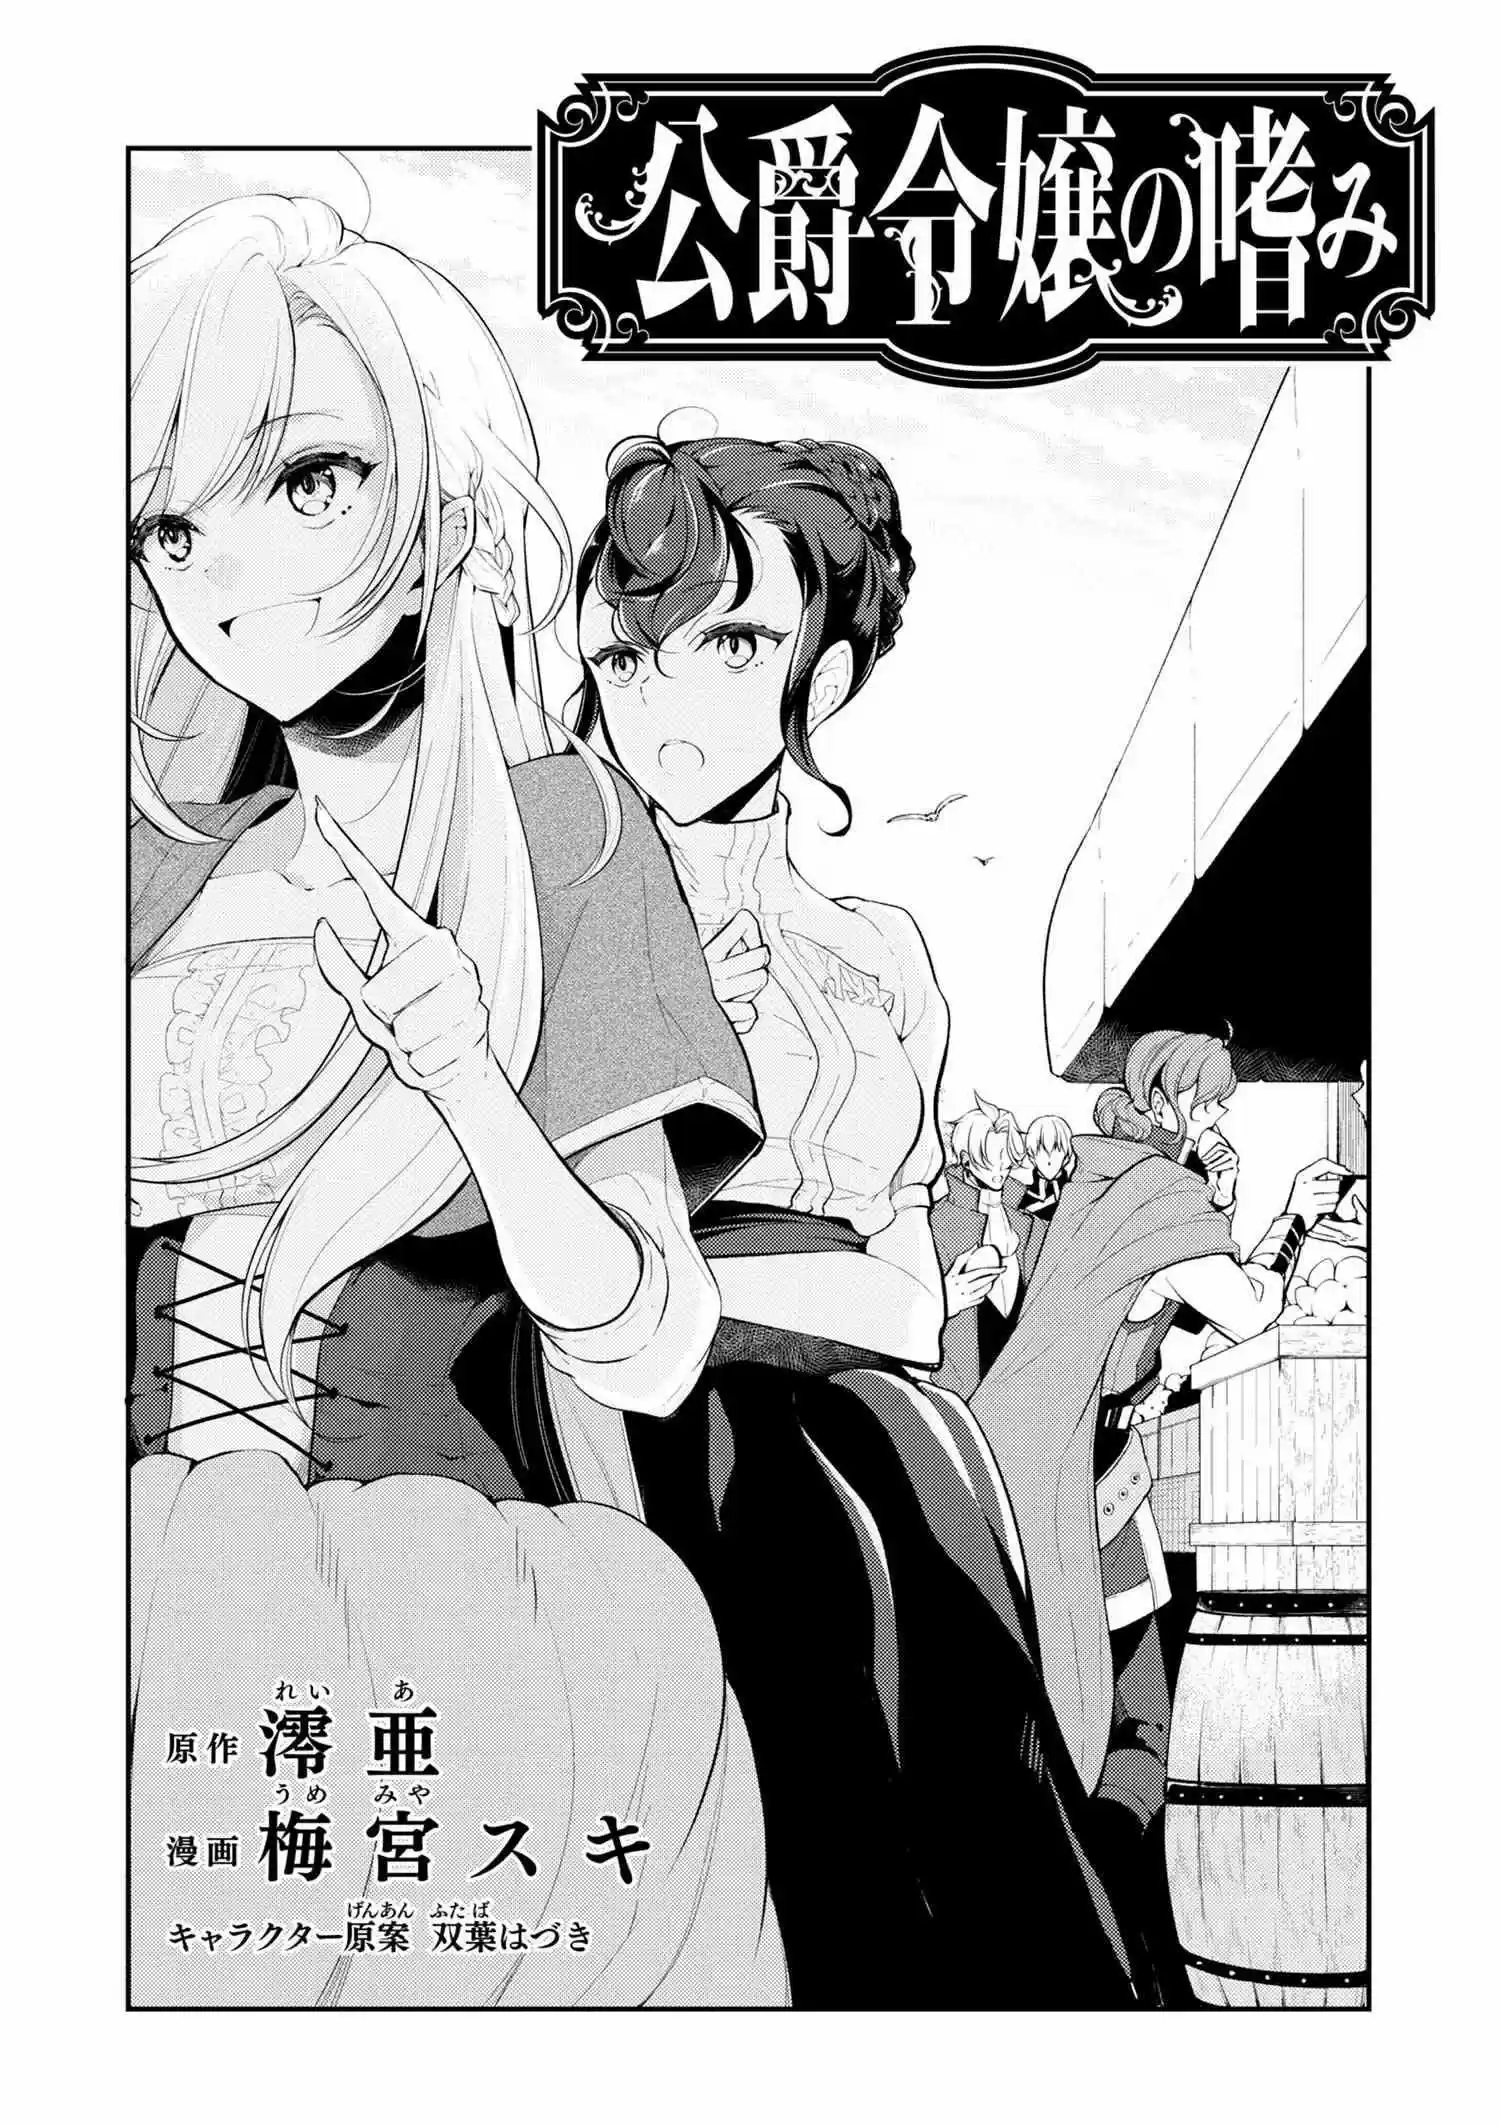 koushaku reijou no tashinami: Chapter 23 - Page 1